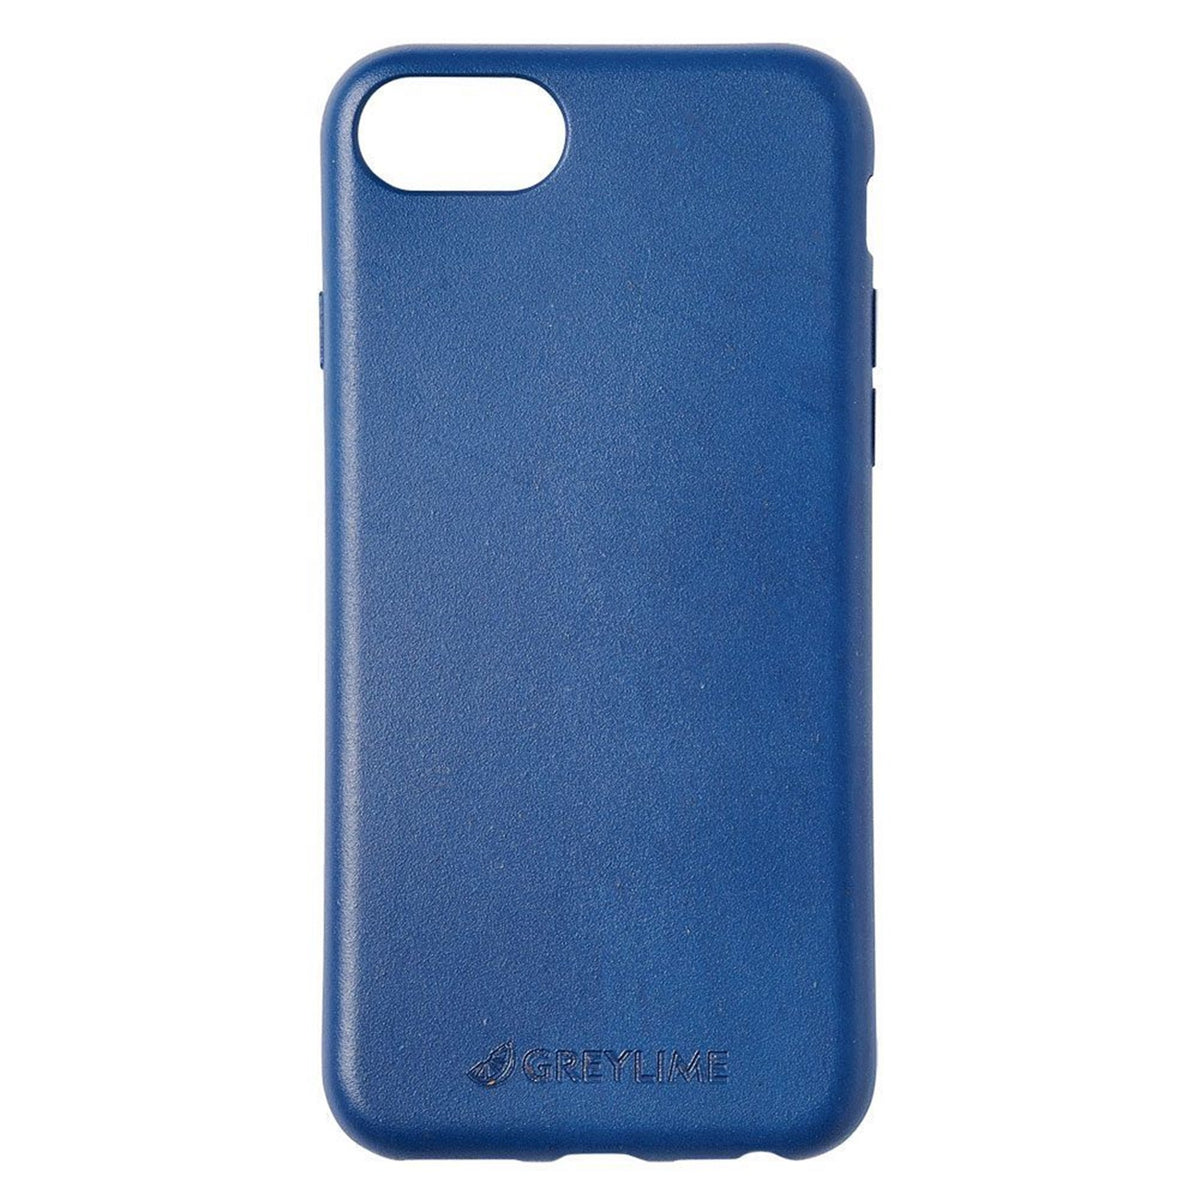 GreyLime-iPhone-6-7-8-SE-biodegradable-cover-Navy-blue-COIP67803-V4.jpg